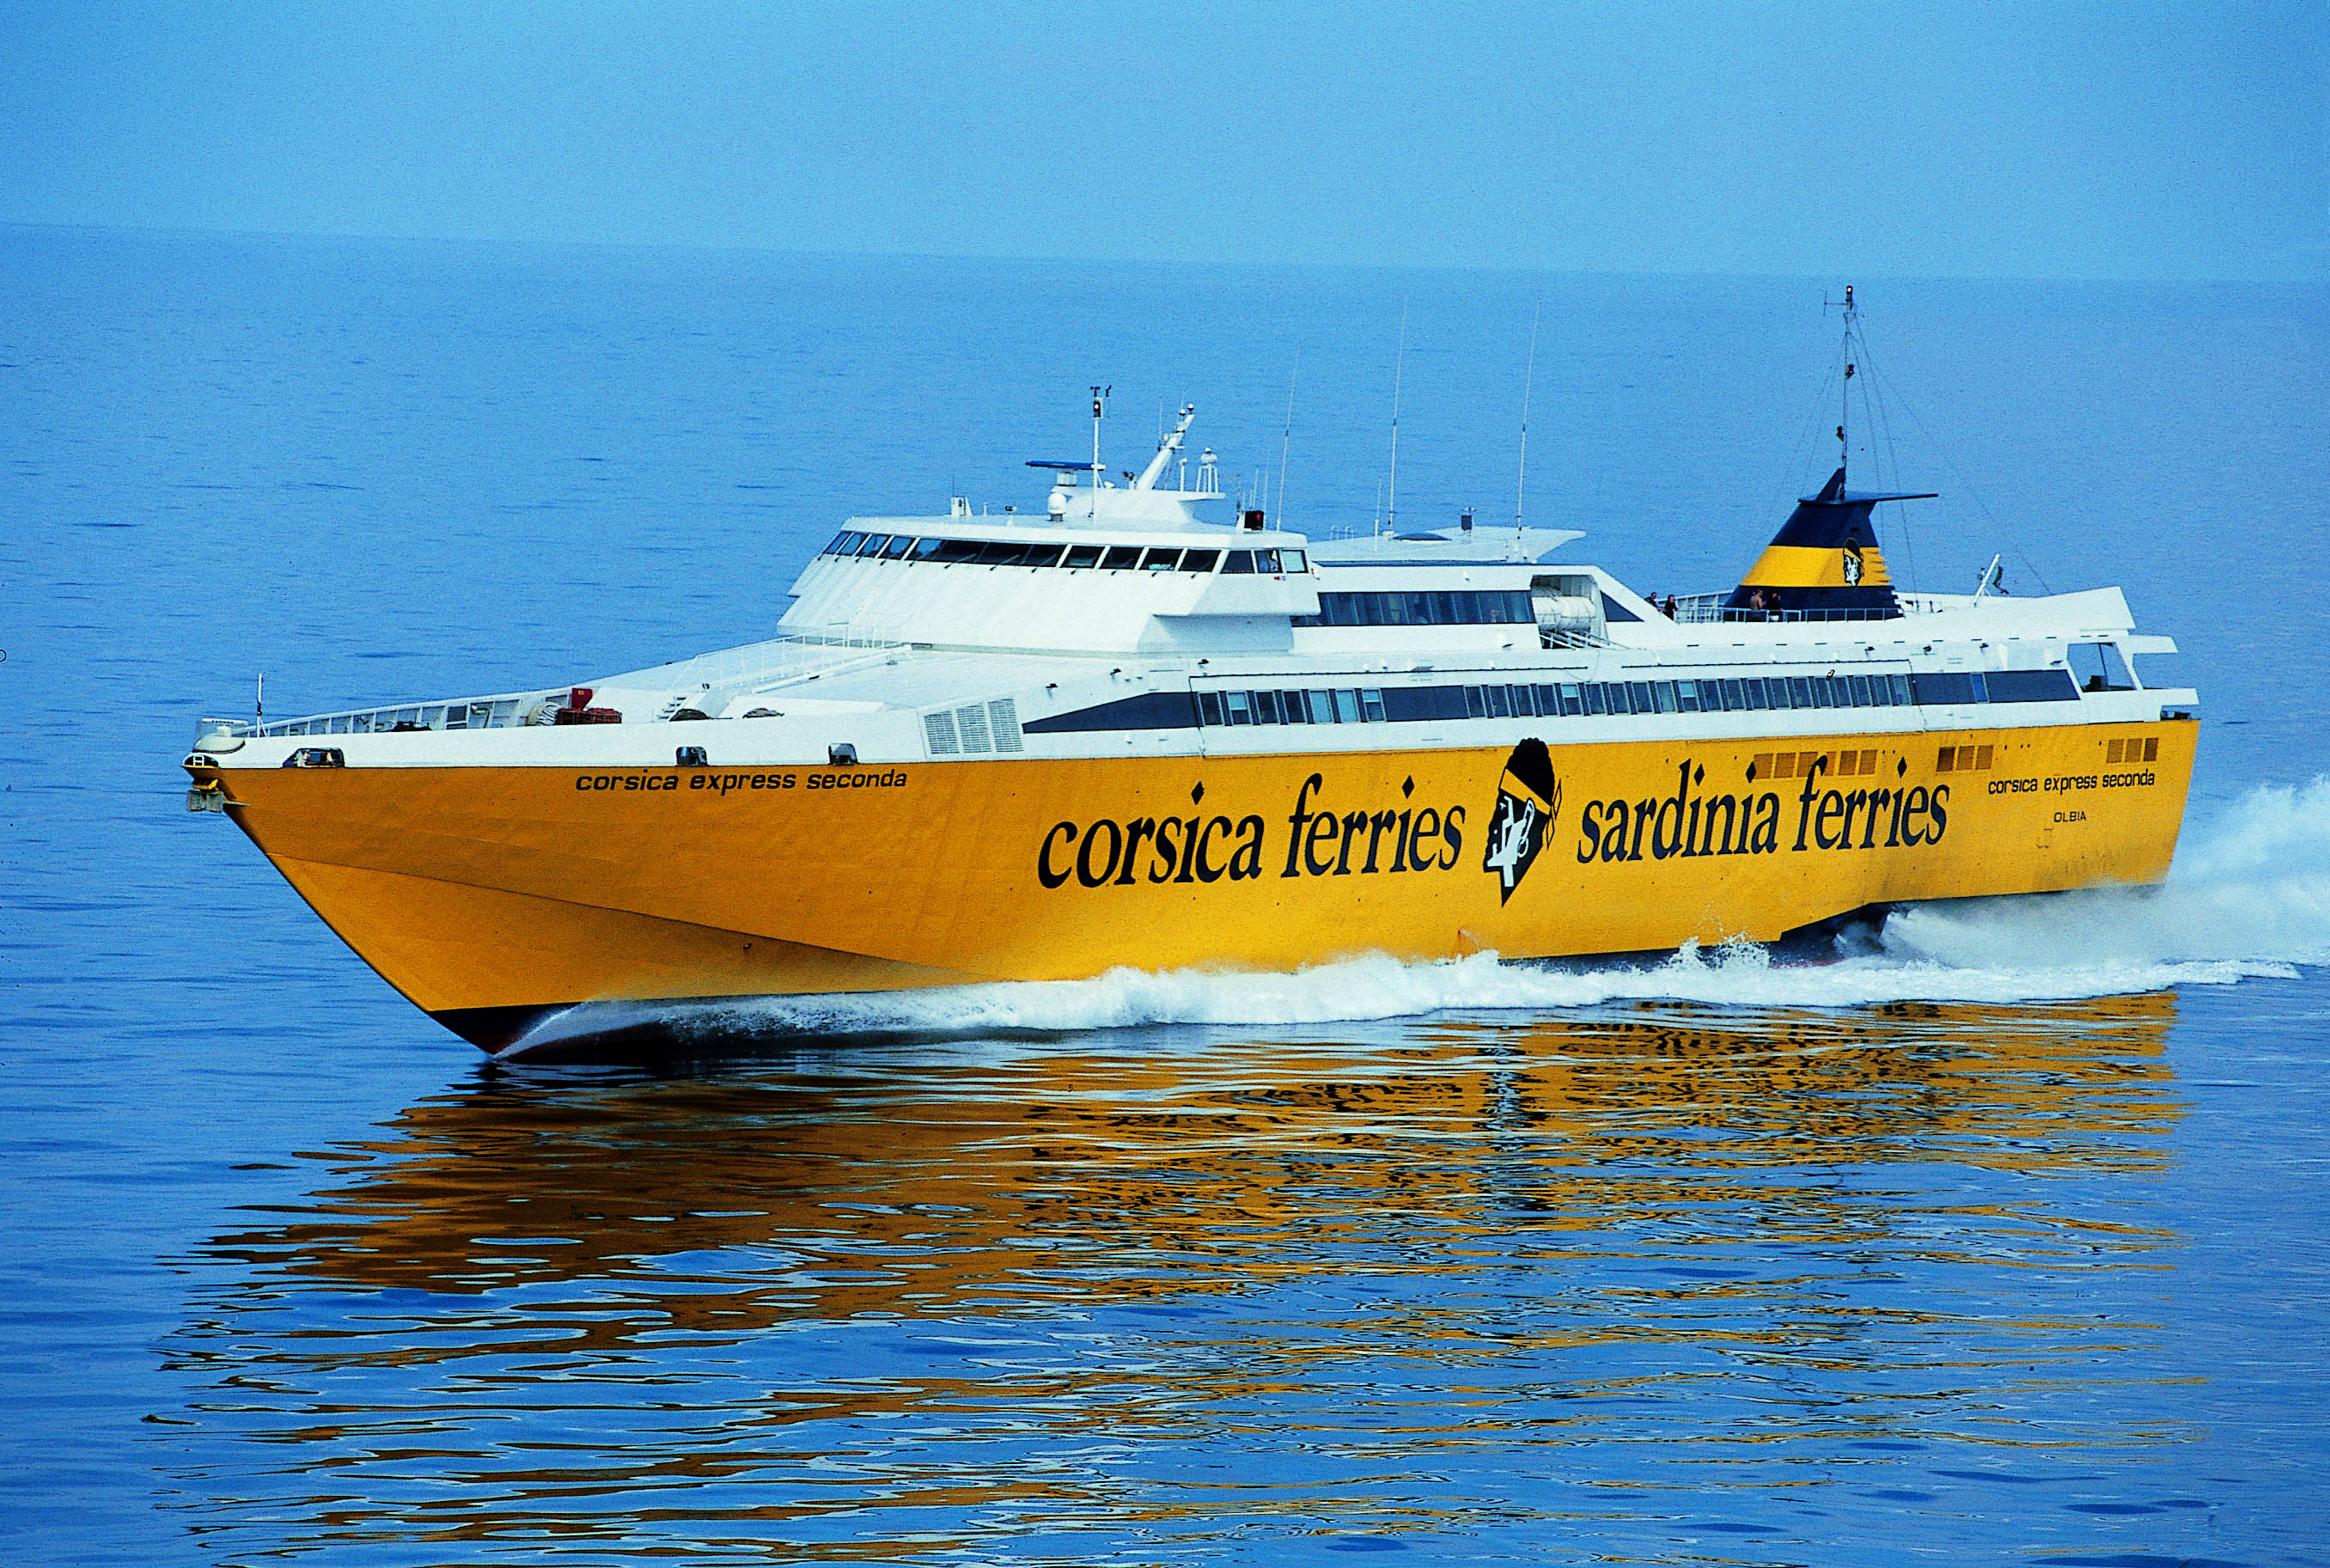 Da Corsica Ferries nuova campagna per l’ambiente